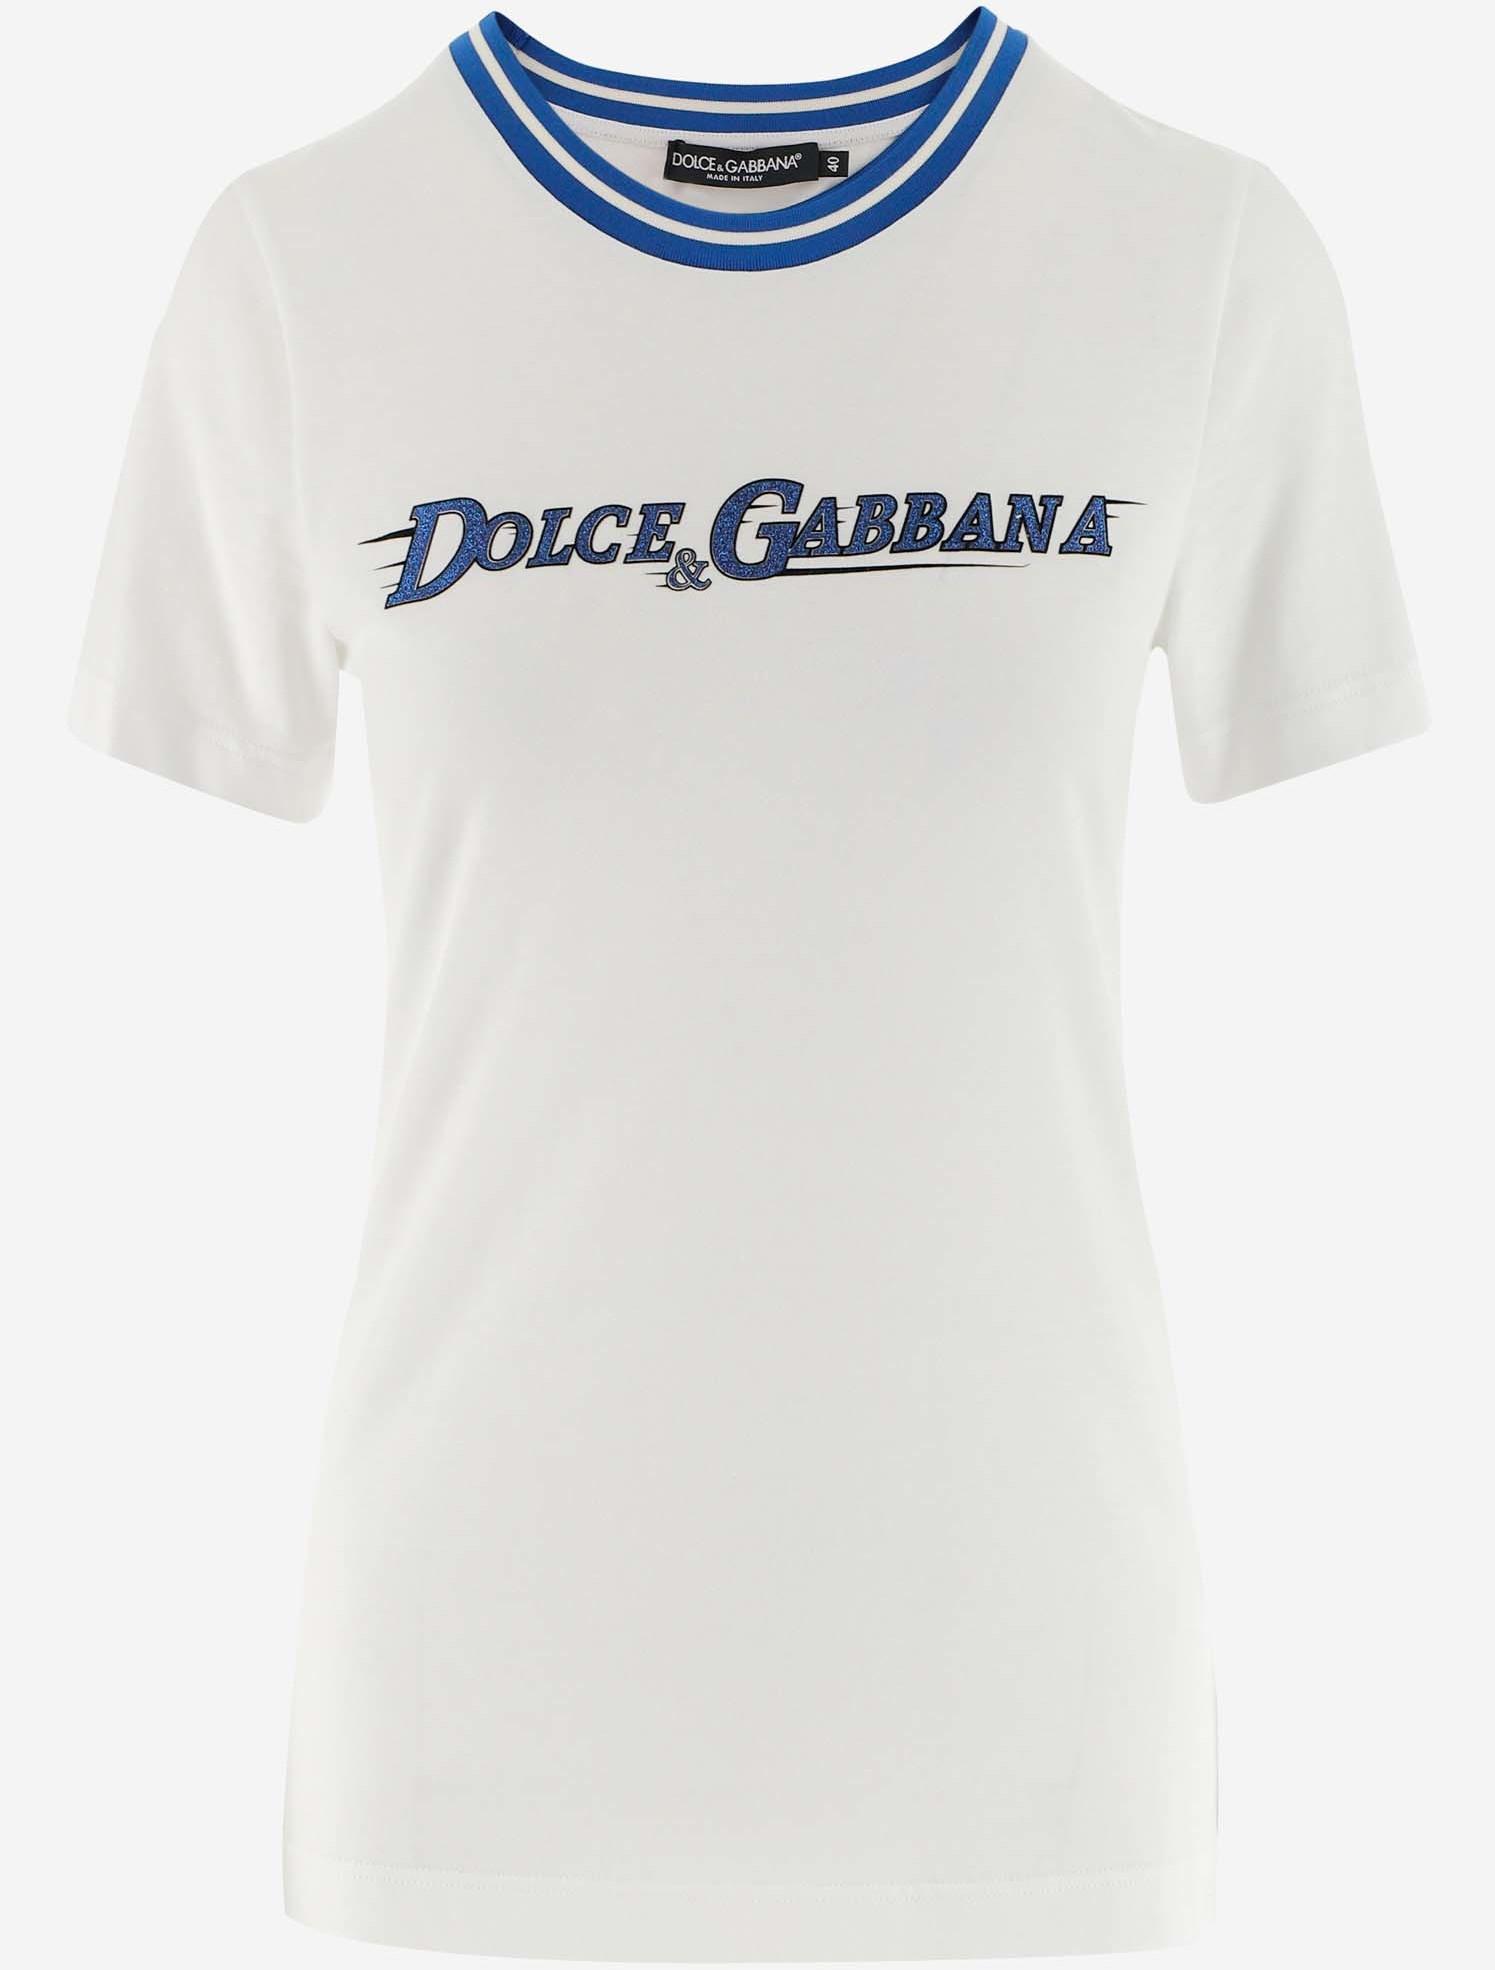 dolce and gabbana t shirt women's